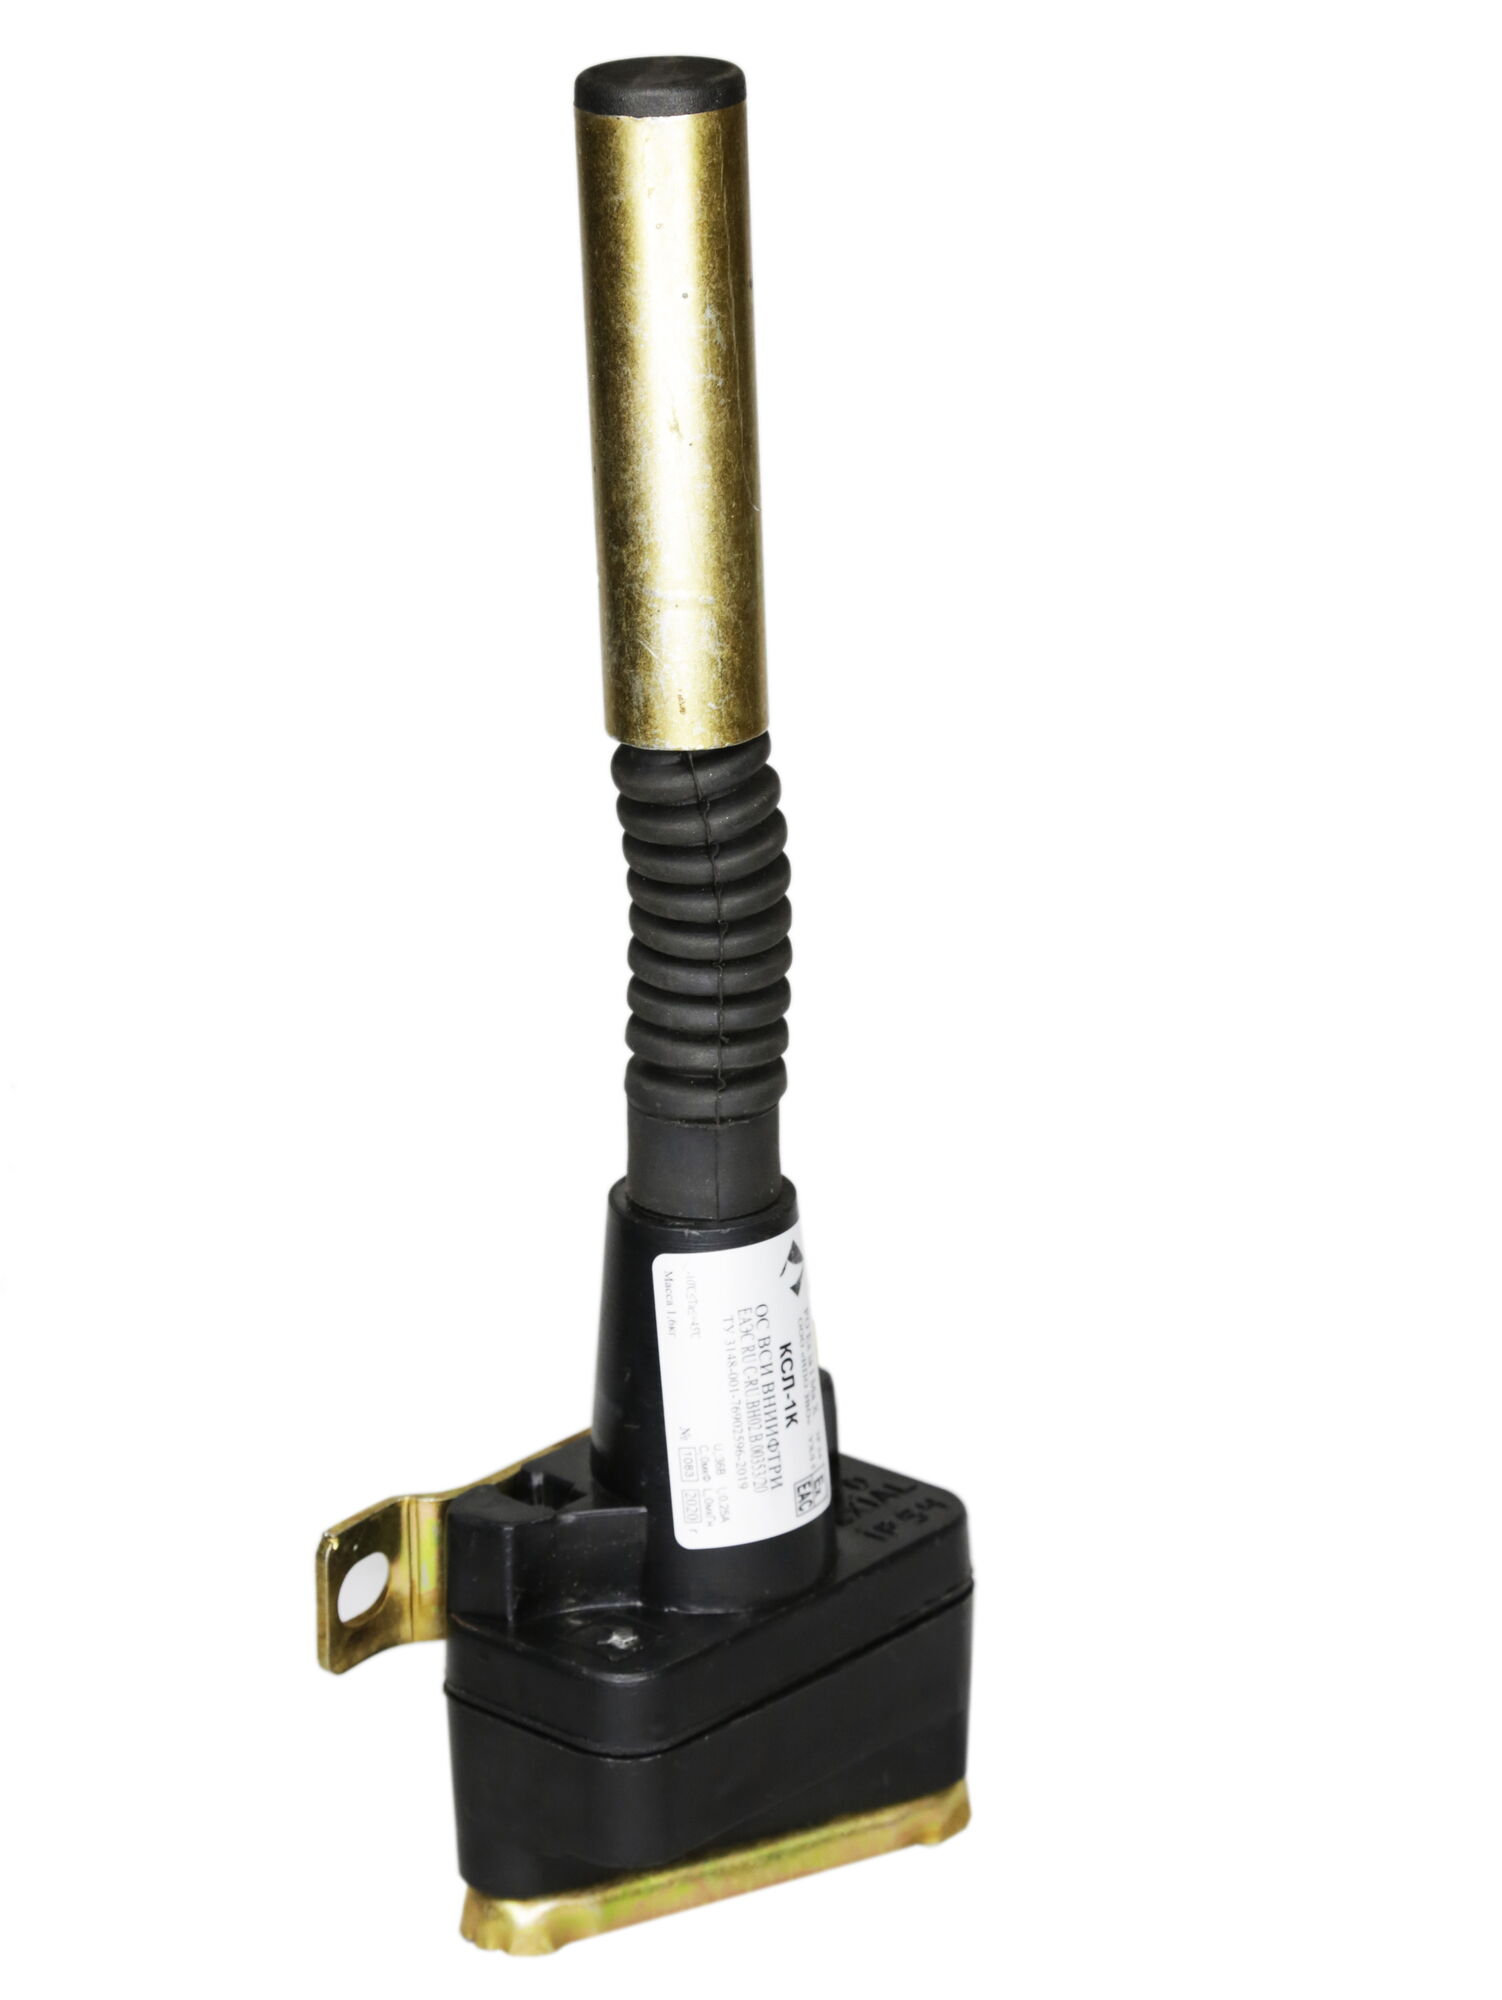 КСЛ-1К датчик контроля схода ленты